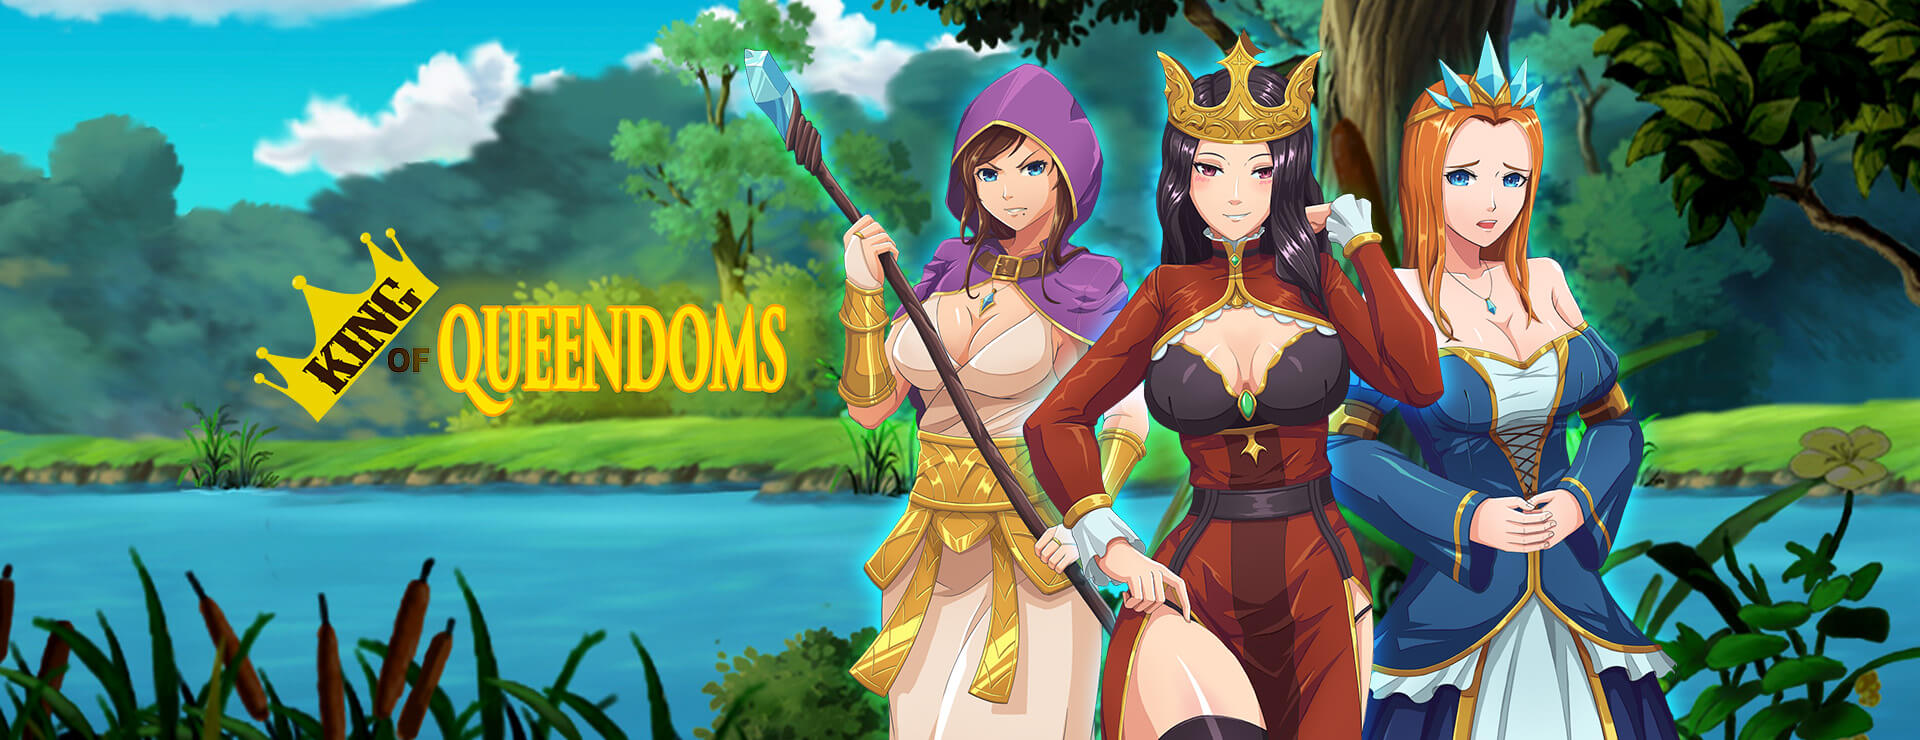 King of Queendoms - Visual Novel Game